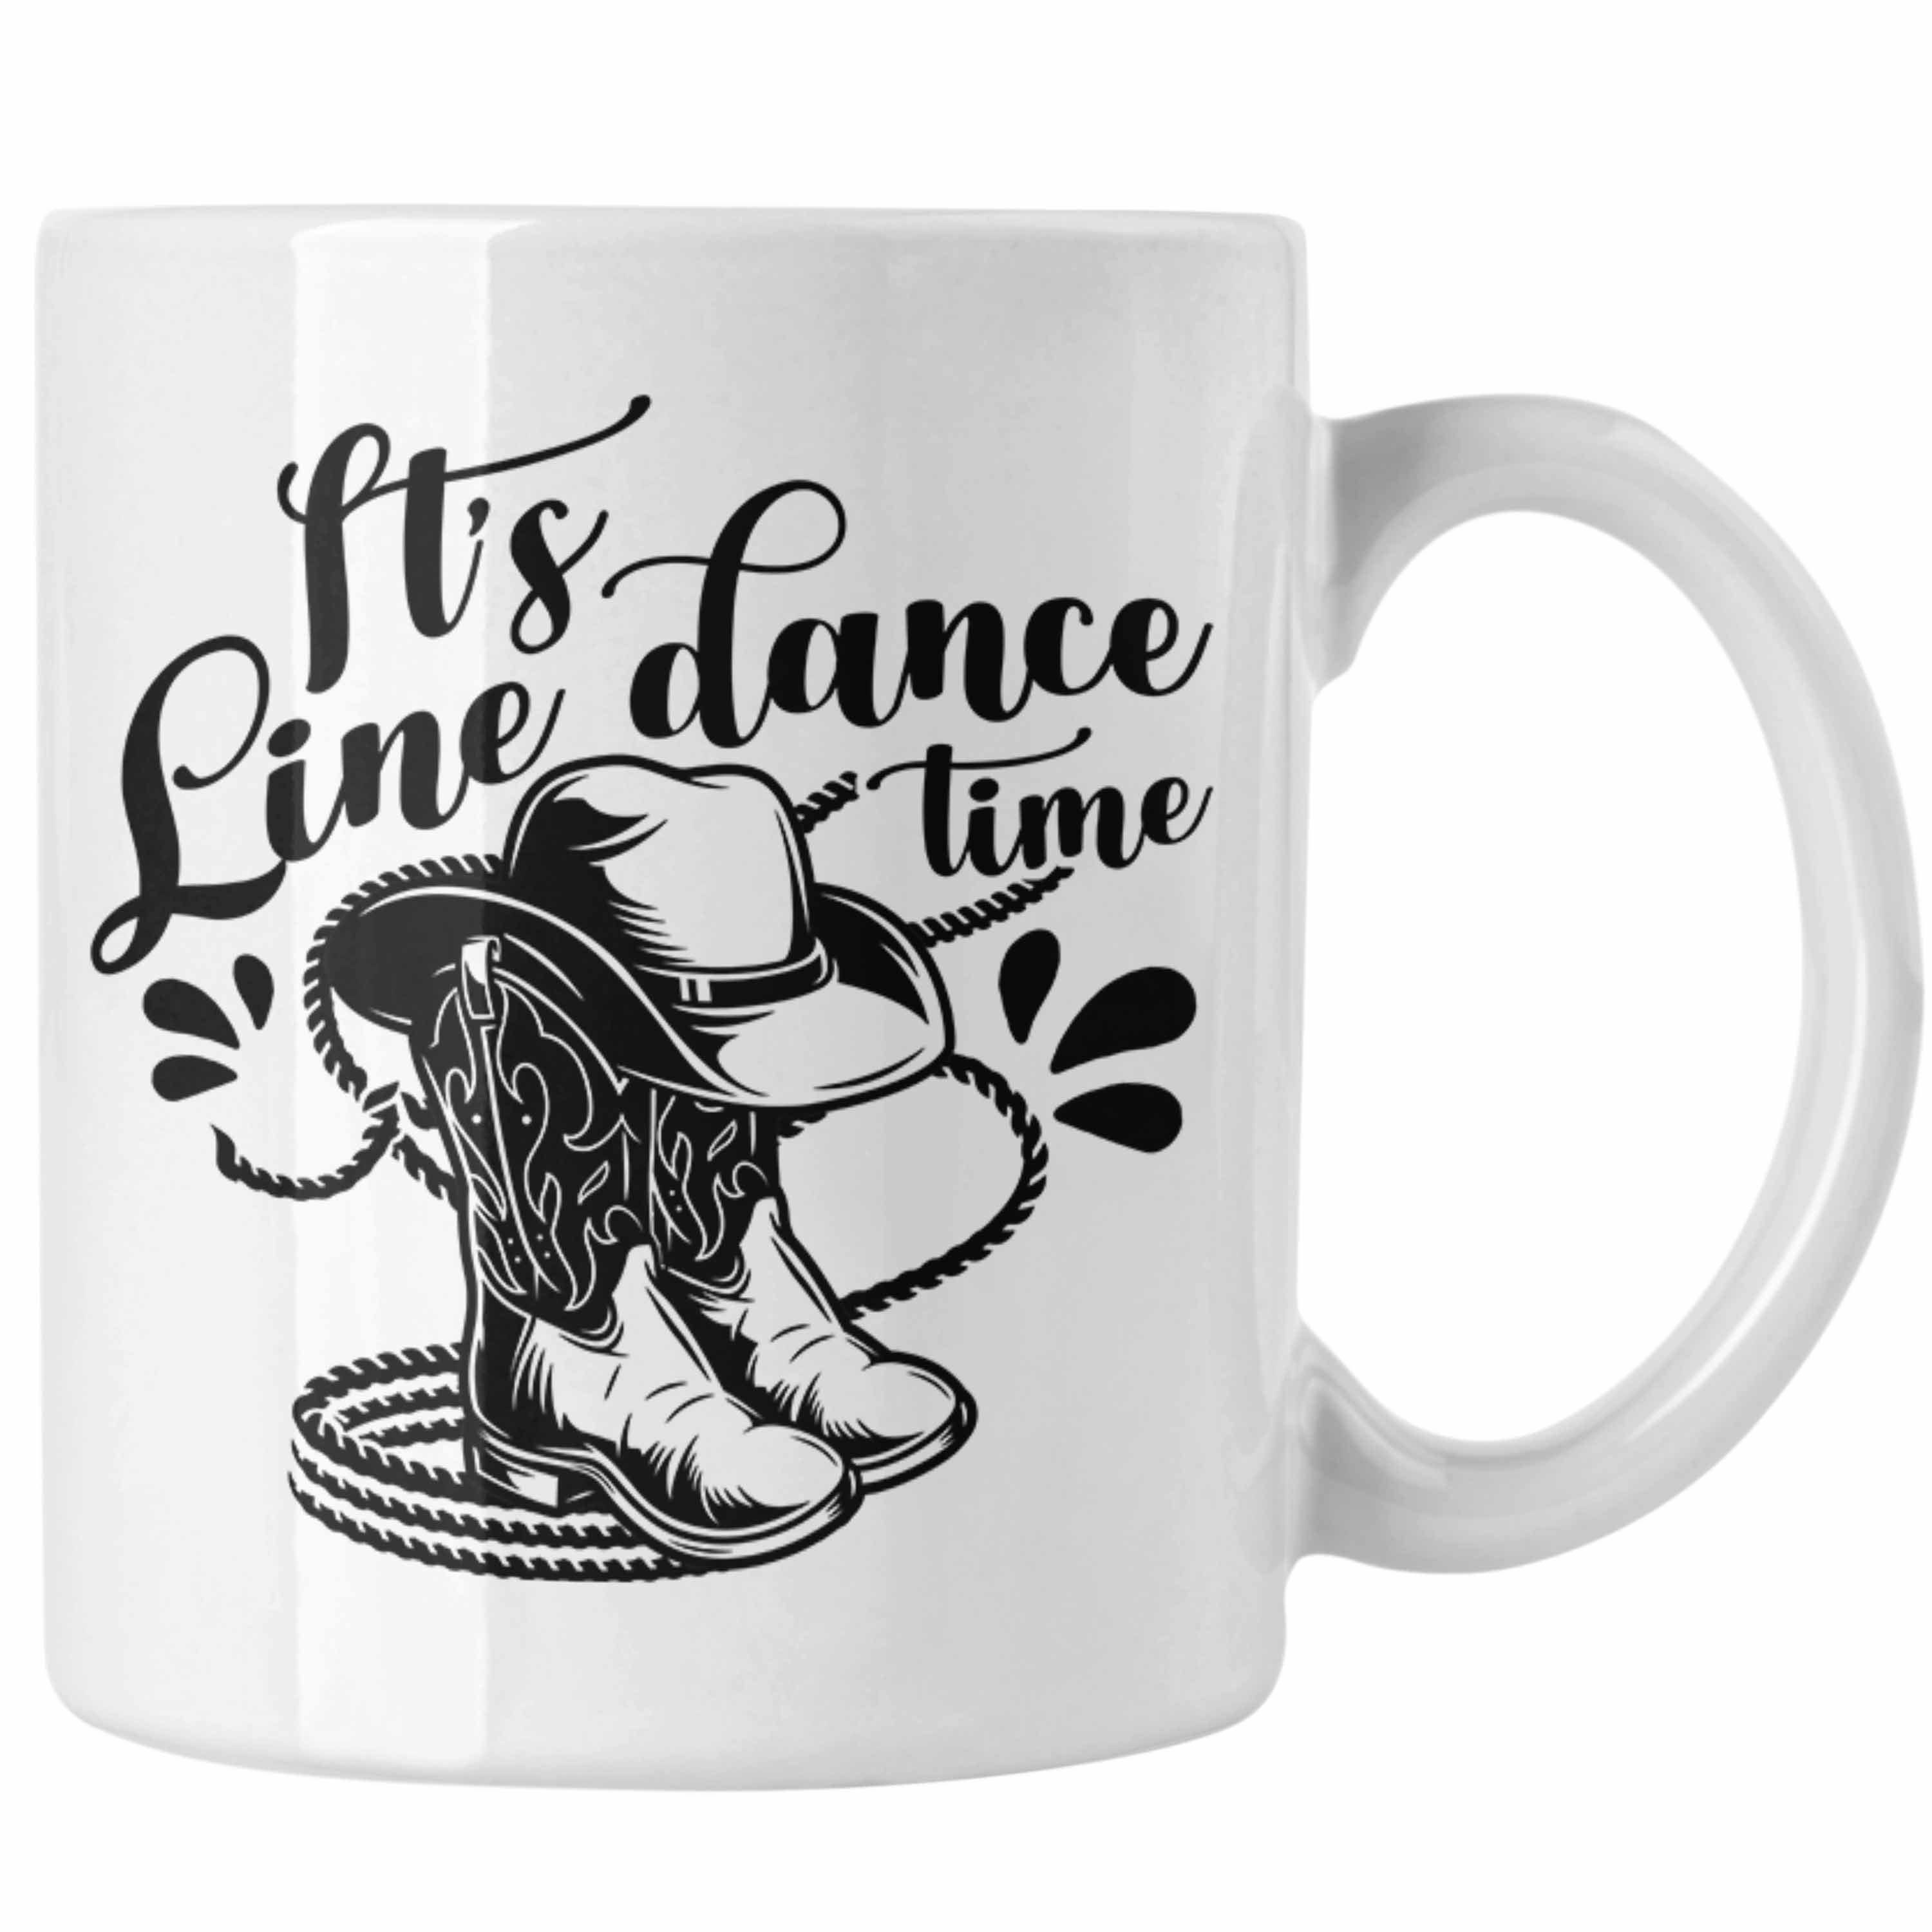 Trendation Tasse Lustige Tasse "It's Line Line Dance Geschenk Time" Fans Weiss Dance